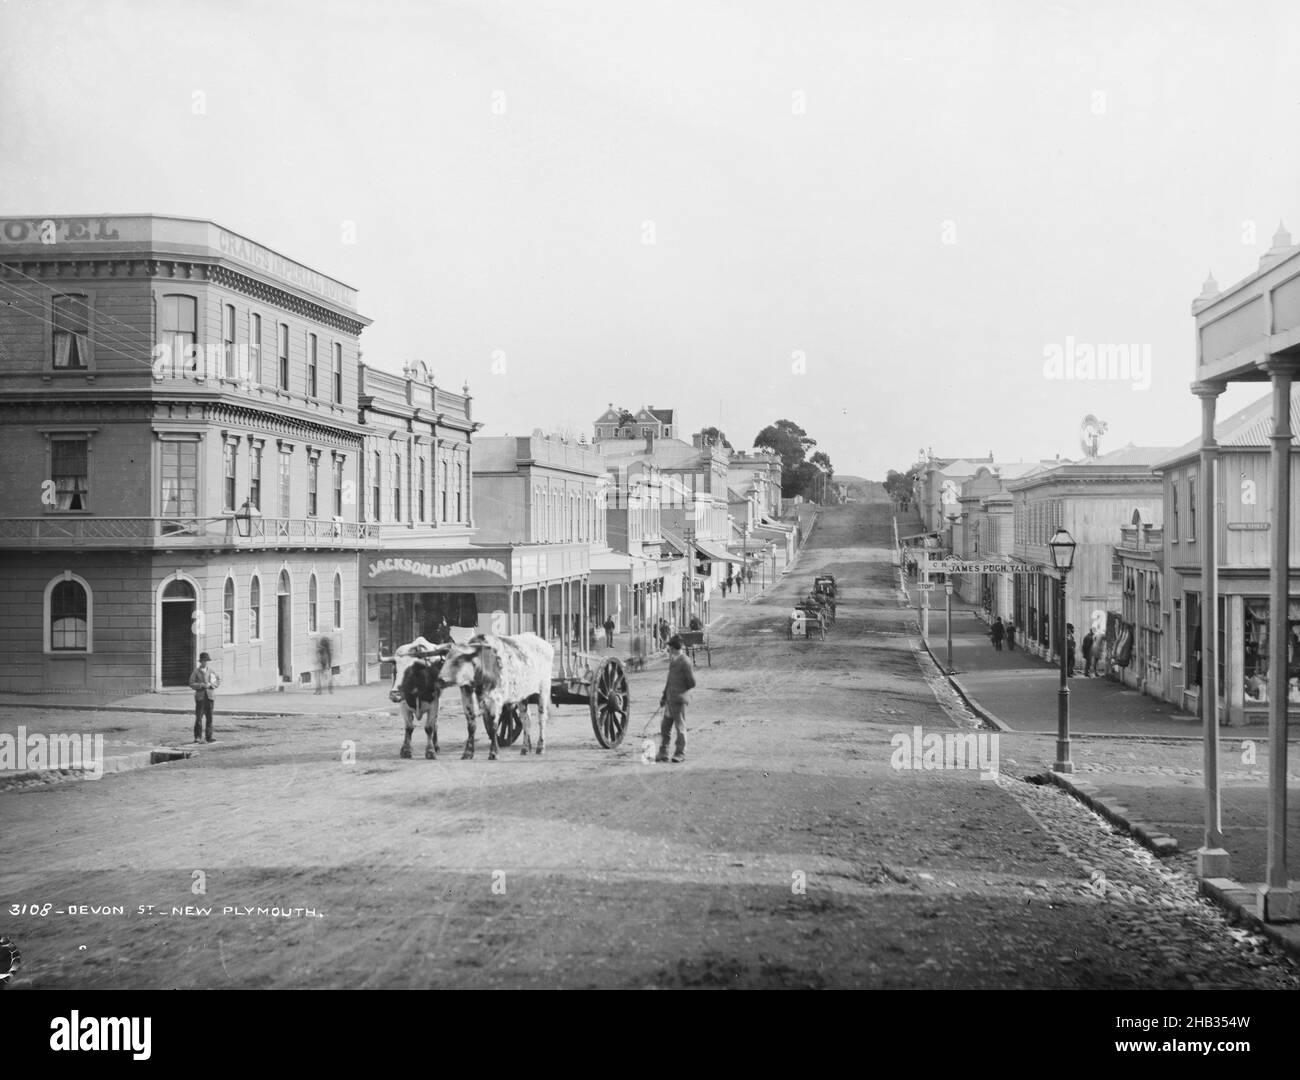 Devon Street, New Plymouth, Burton Brothers studio, photography studio, New Zealand, black-and-white photography Stock Photo